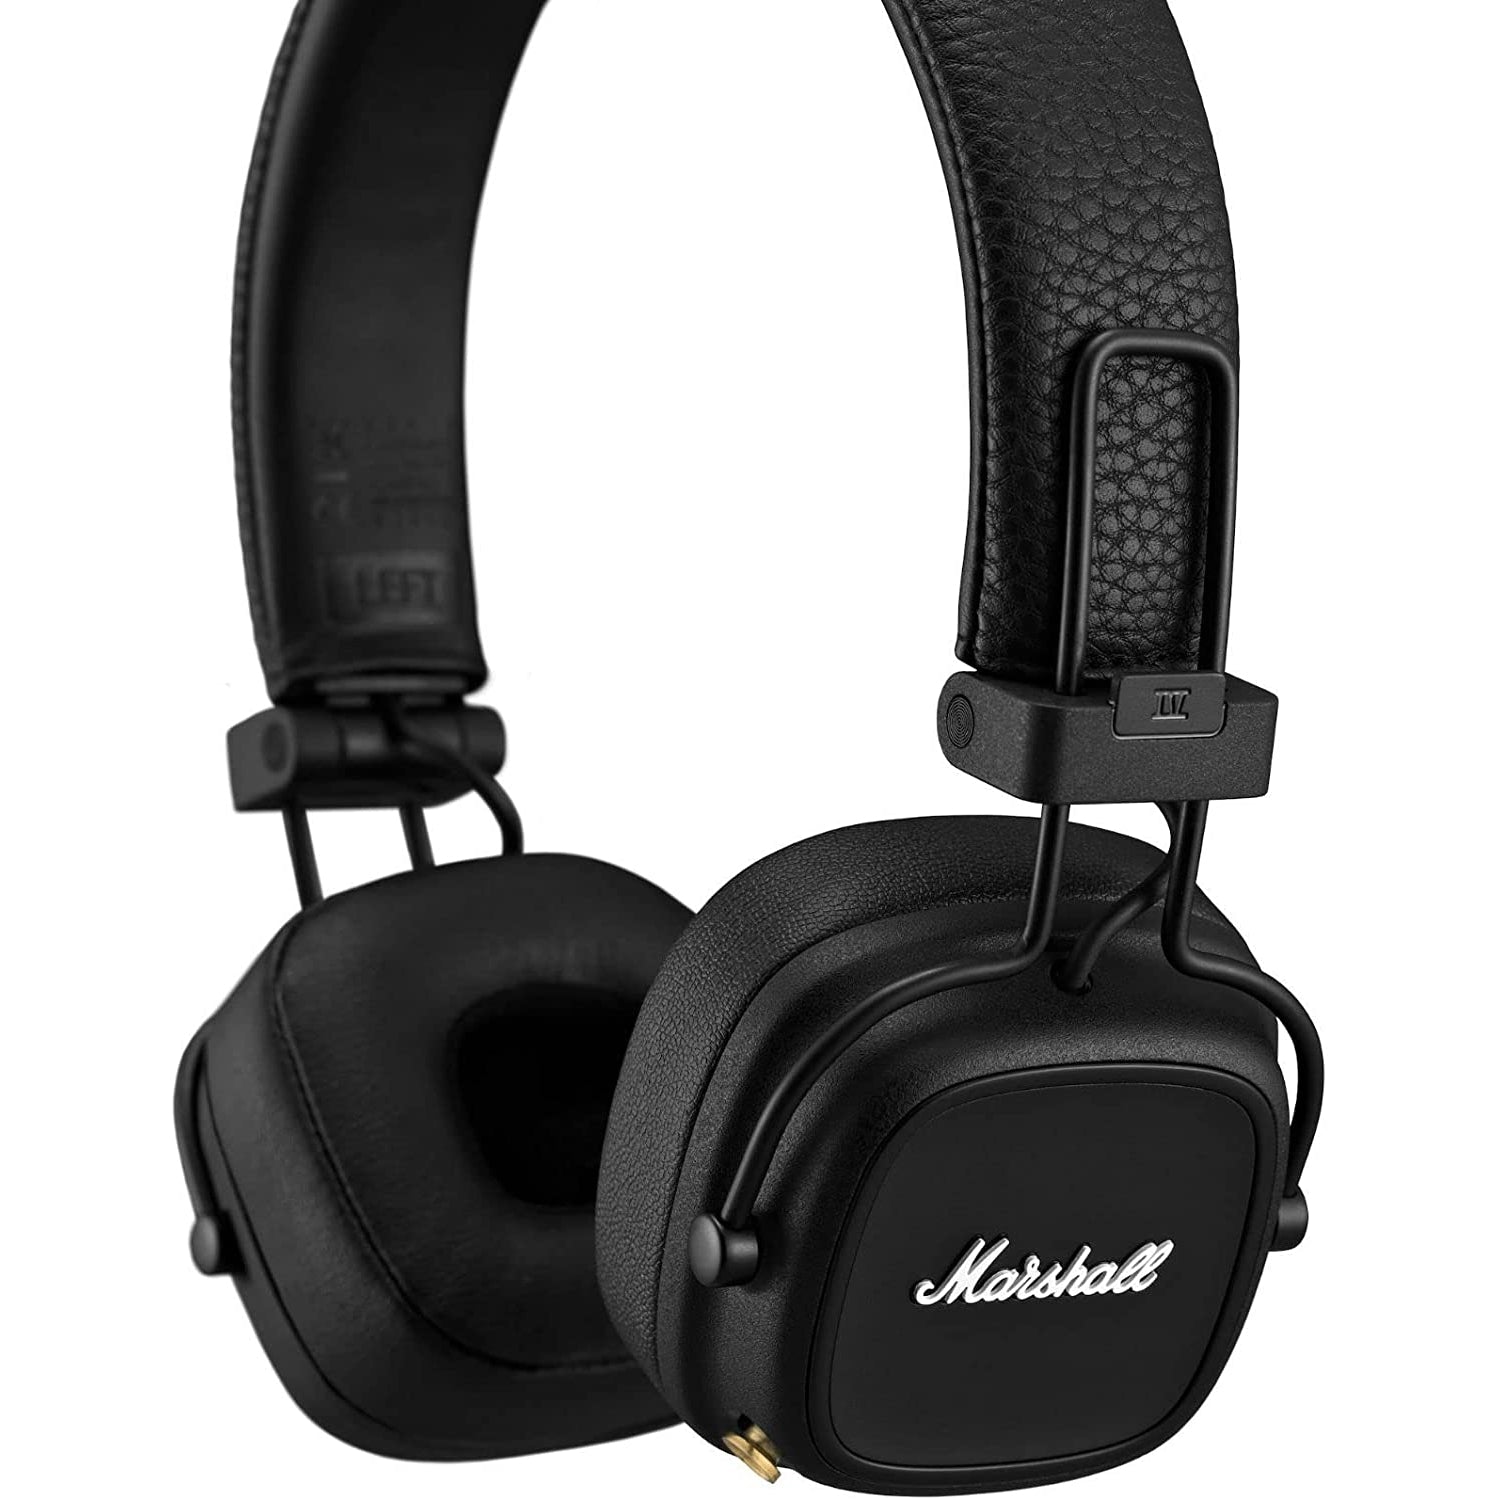 Marshall Major IV Fold Wireless Headphones - Black - Refurbished Good